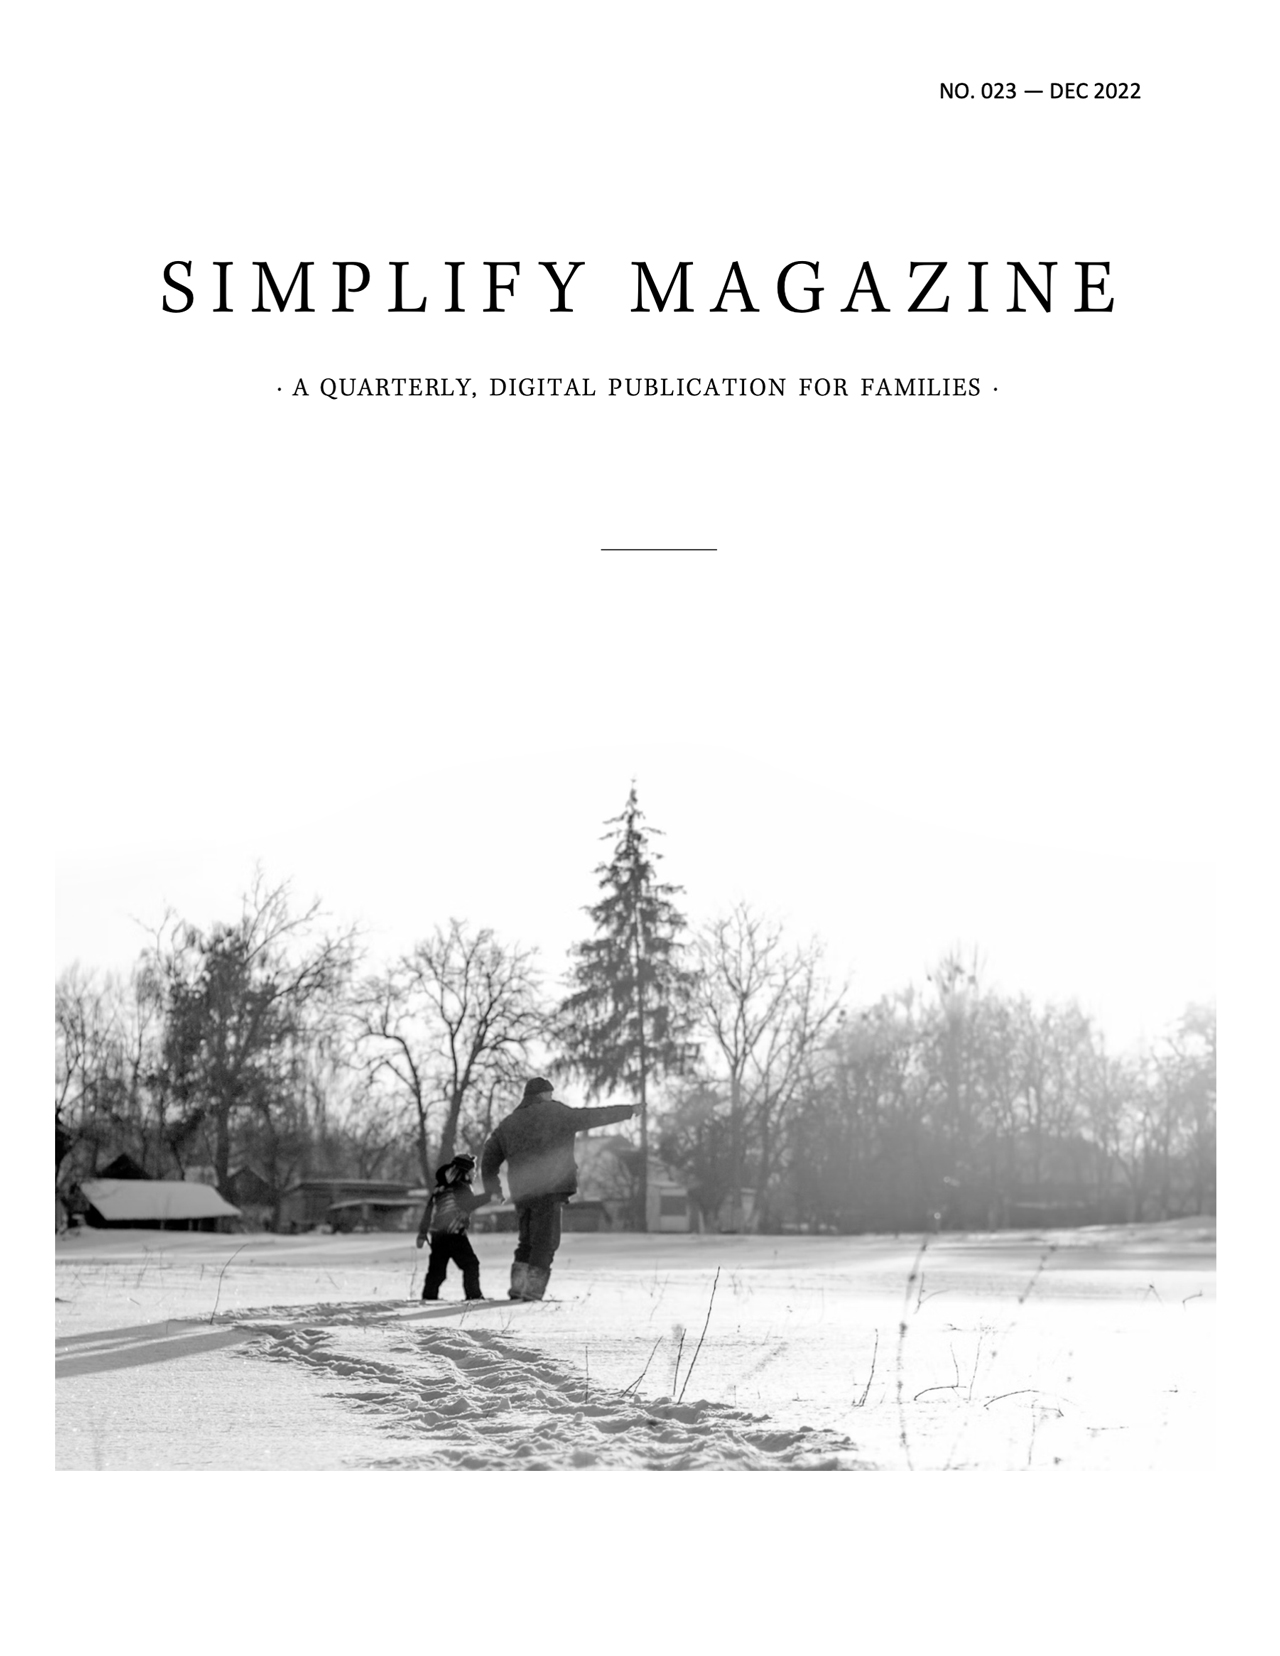 Simplify Magazine Issue #023